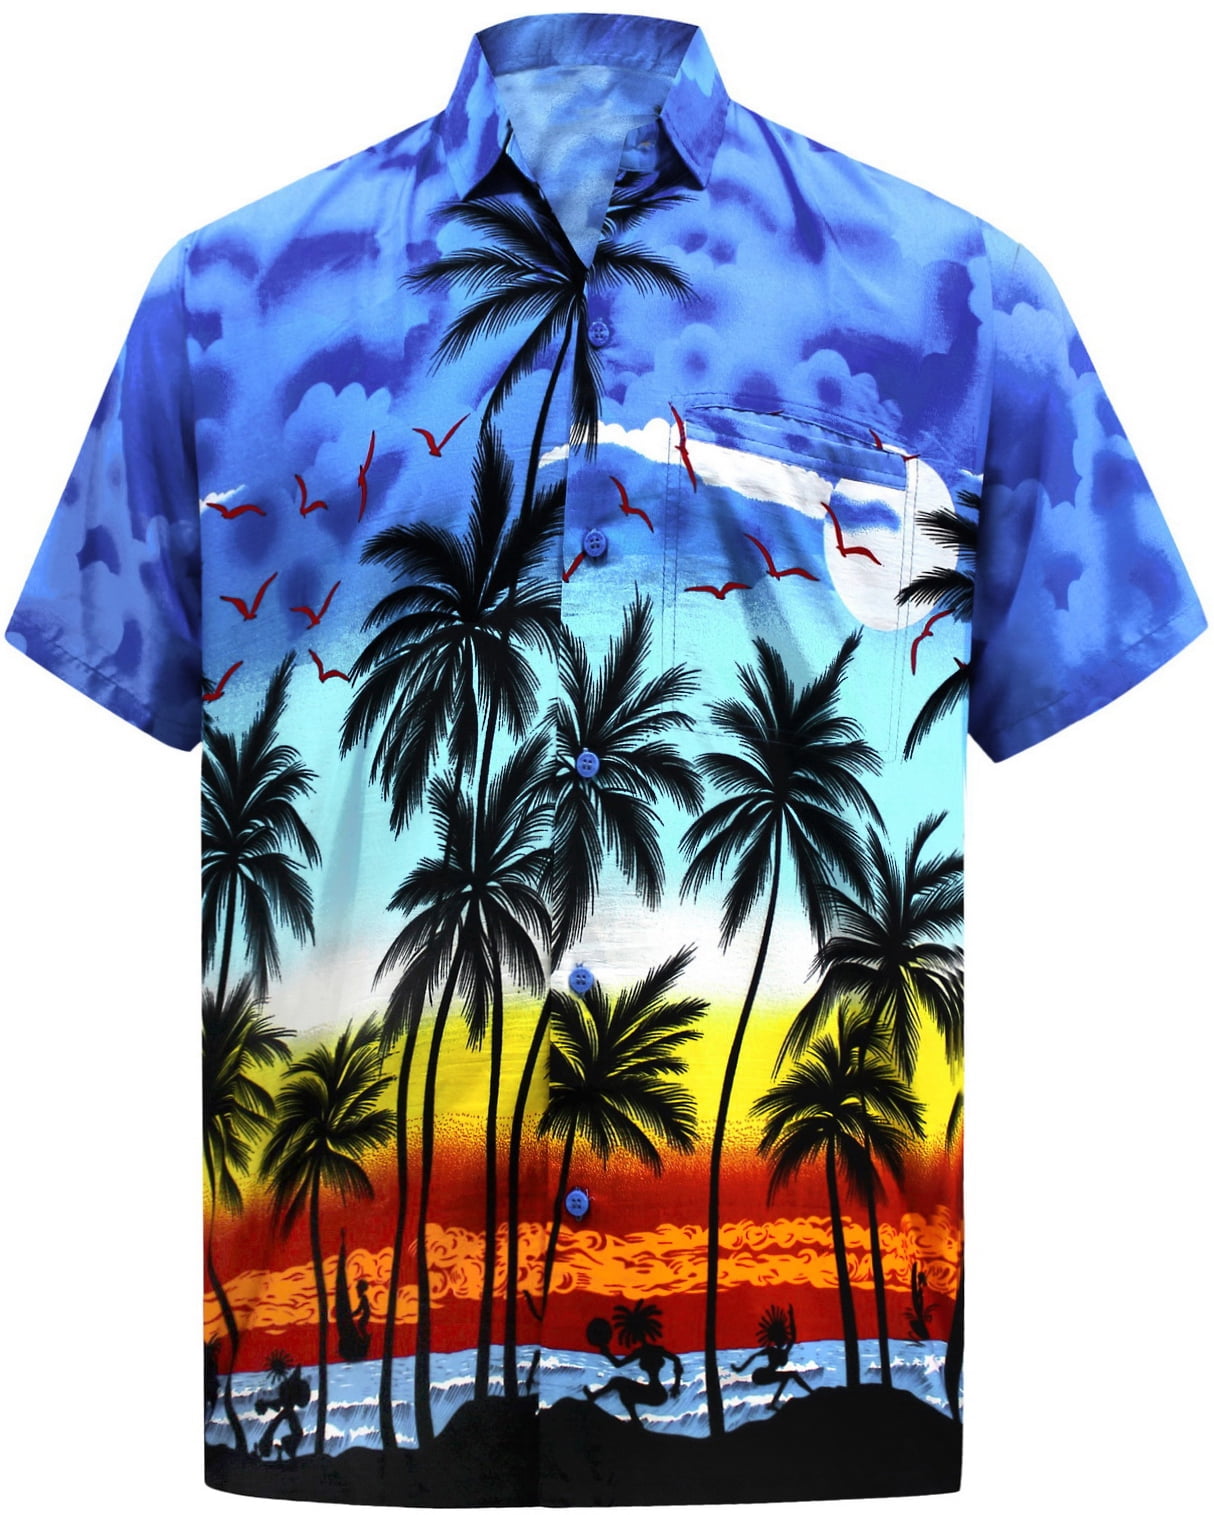 Button Down Party Casual Holiday Camp Beach Holiday Short Sleeve Aloha Tee Allywit 2019 Trend Mens Hawaiian Shirt 